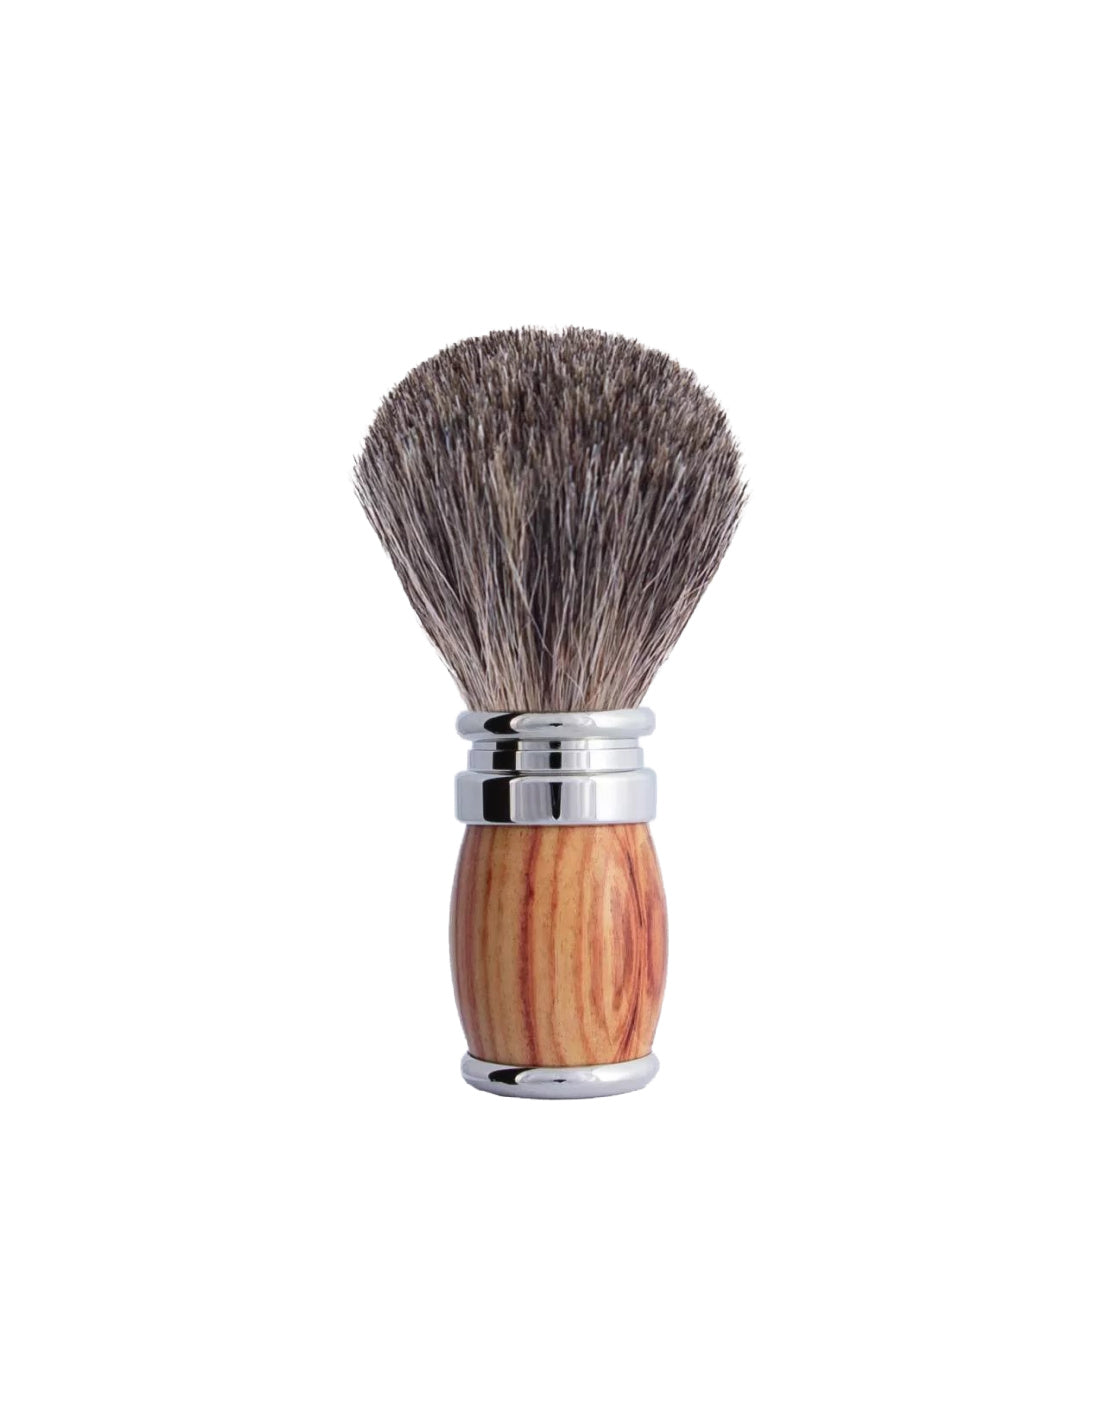 Plisson 1808 Rosewood and Chrome Finish Russian Grey Genuine Badger Shaving Brush - Joris